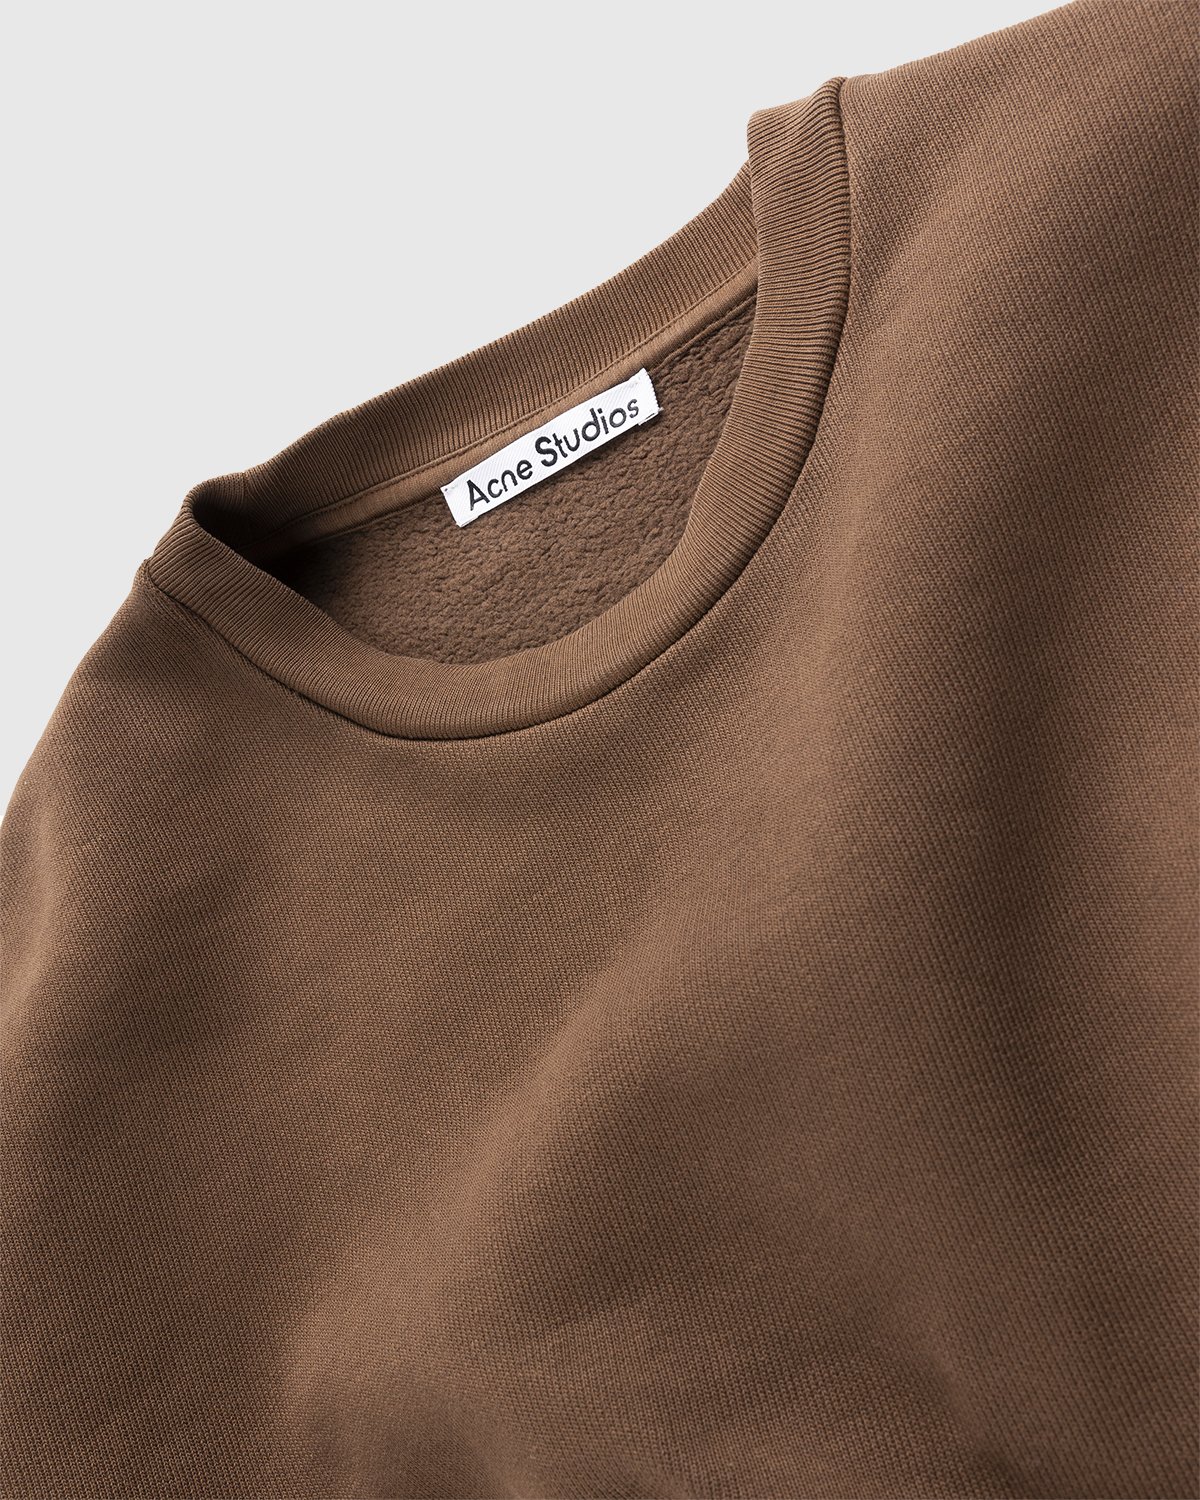 Acne Studios - Logo Sweatshirt Chocolate Brown - Clothing - Brown - Image 3